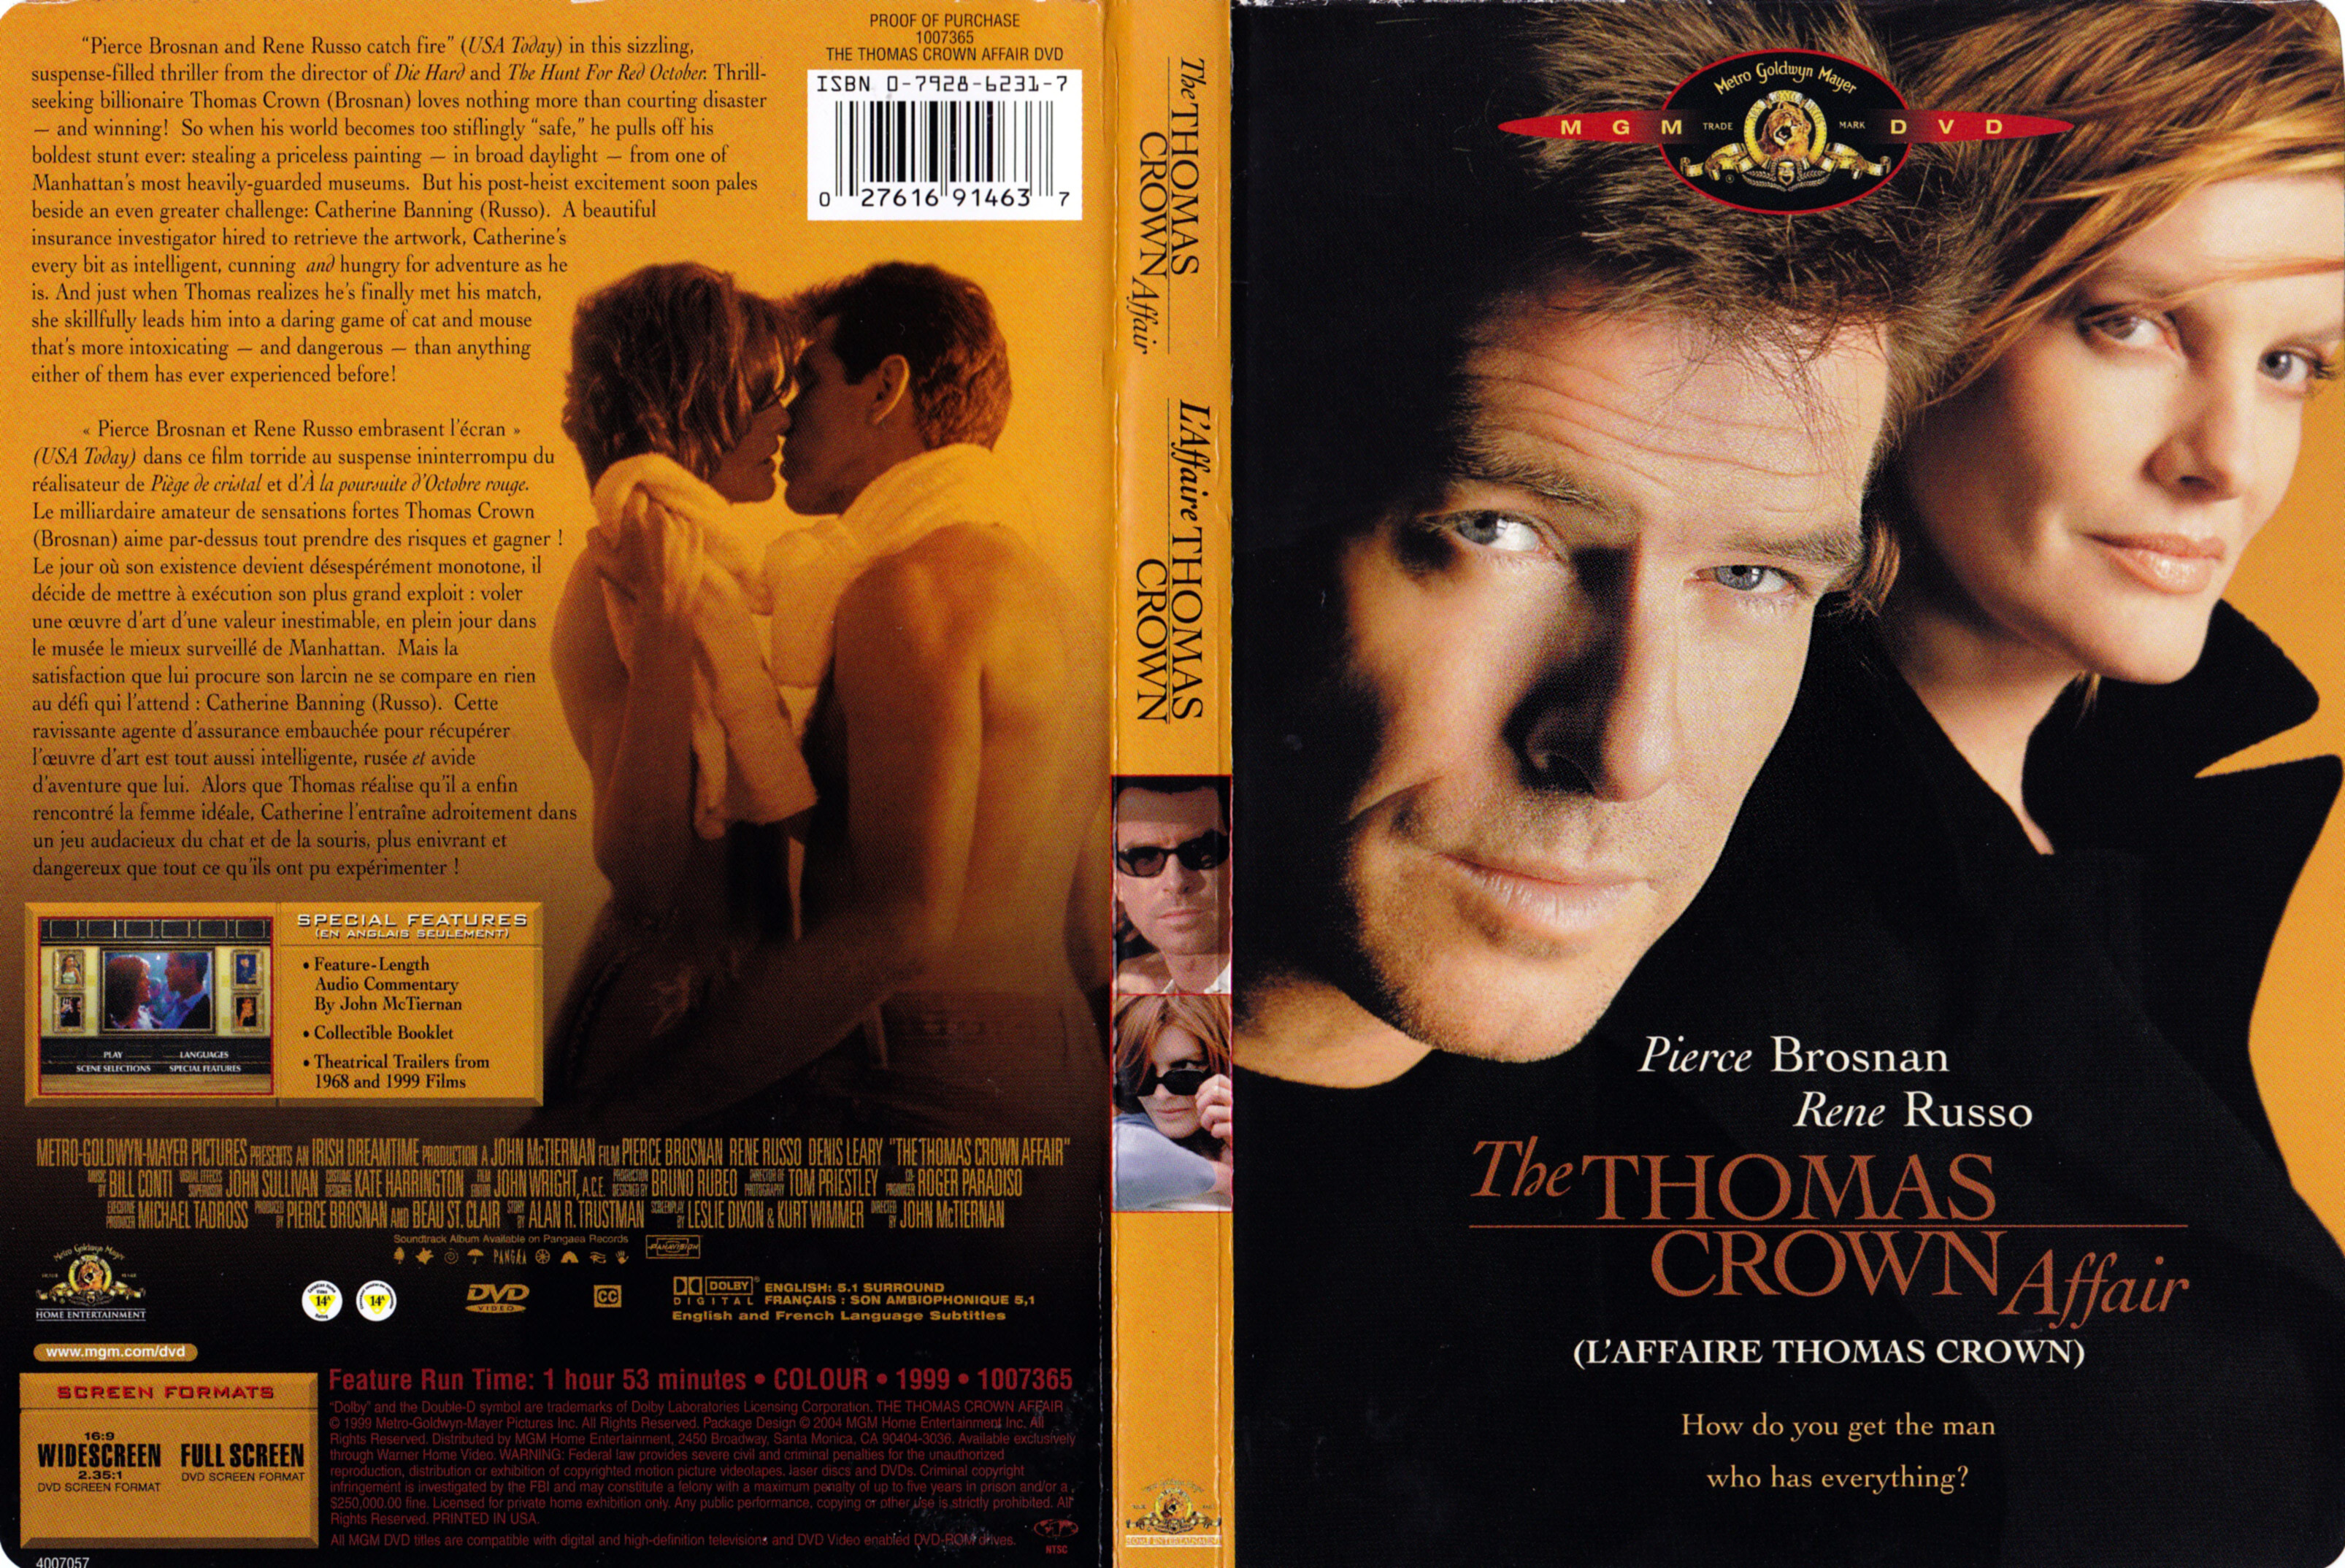 Jaquette DVD The Thomas Crown affair - L